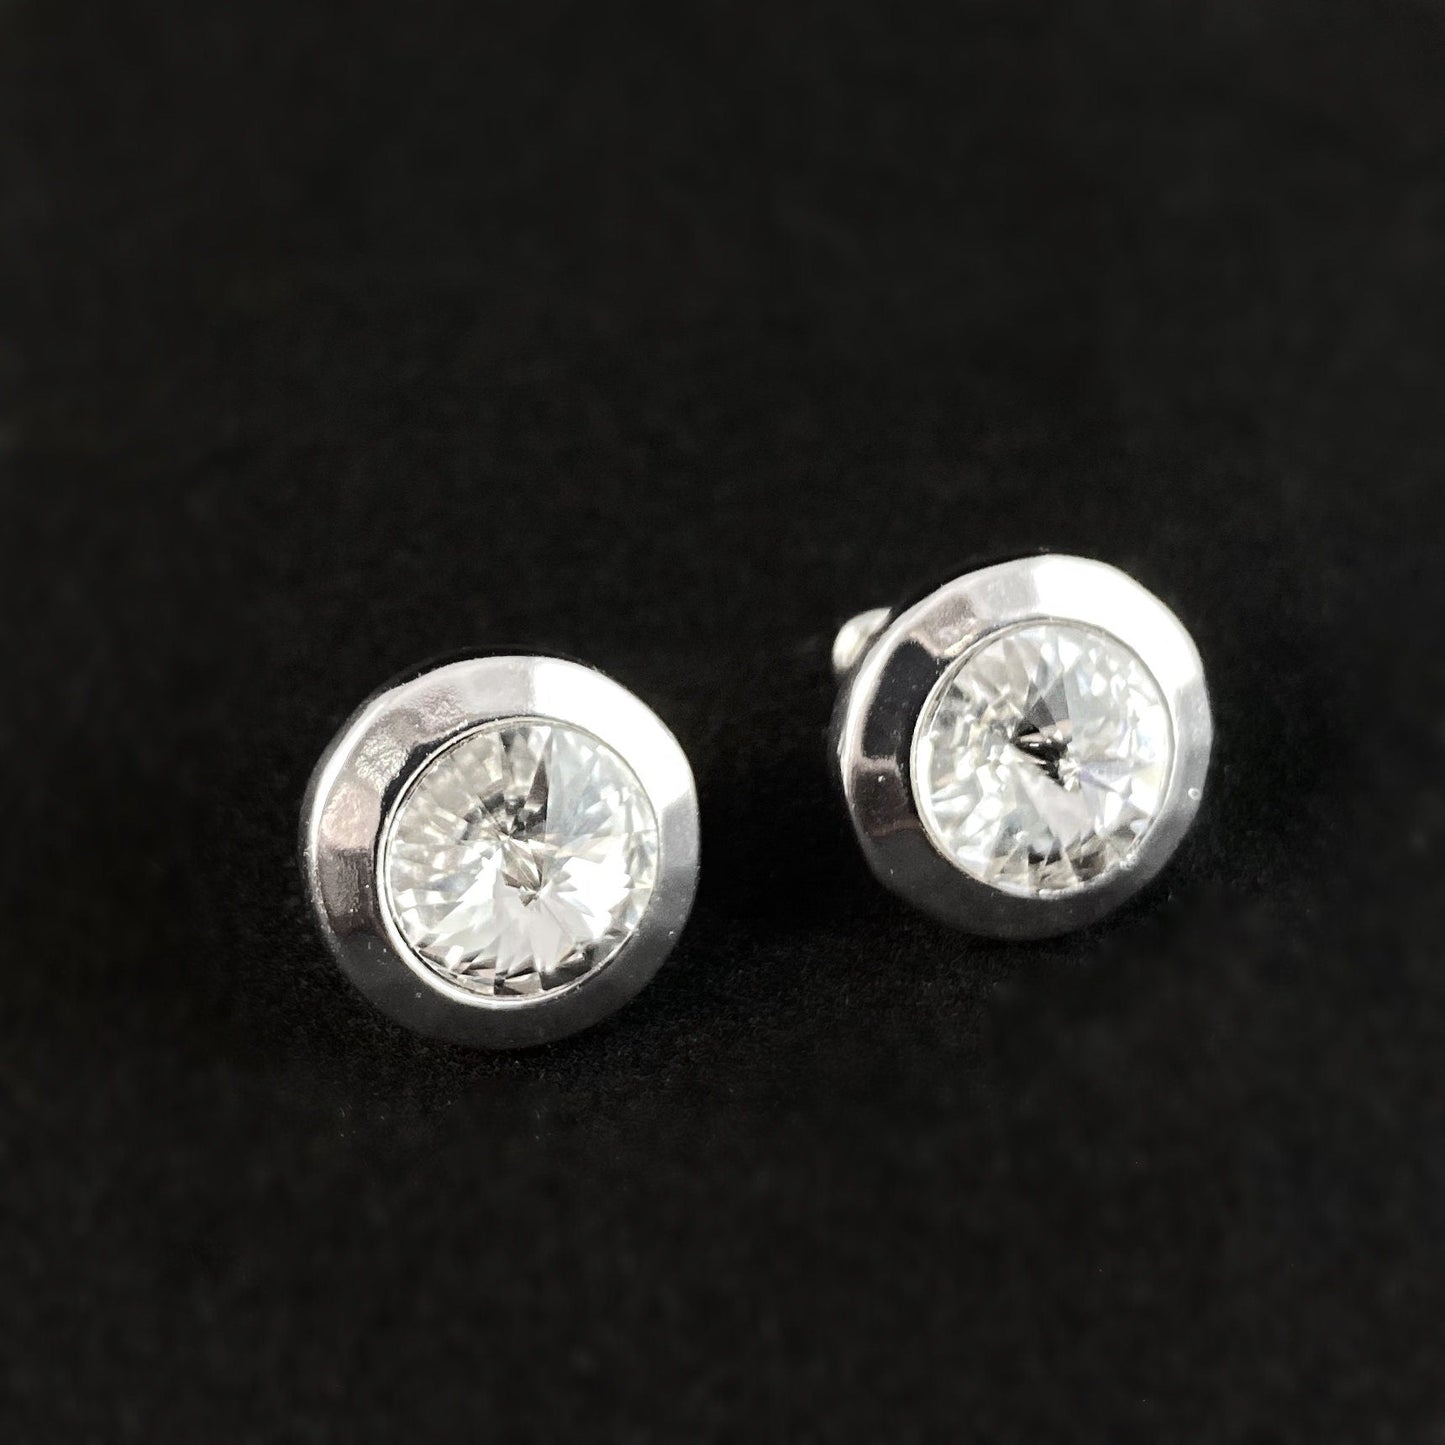 Round Silver Stud Earrings with Crystal, Handmade Nickel Free